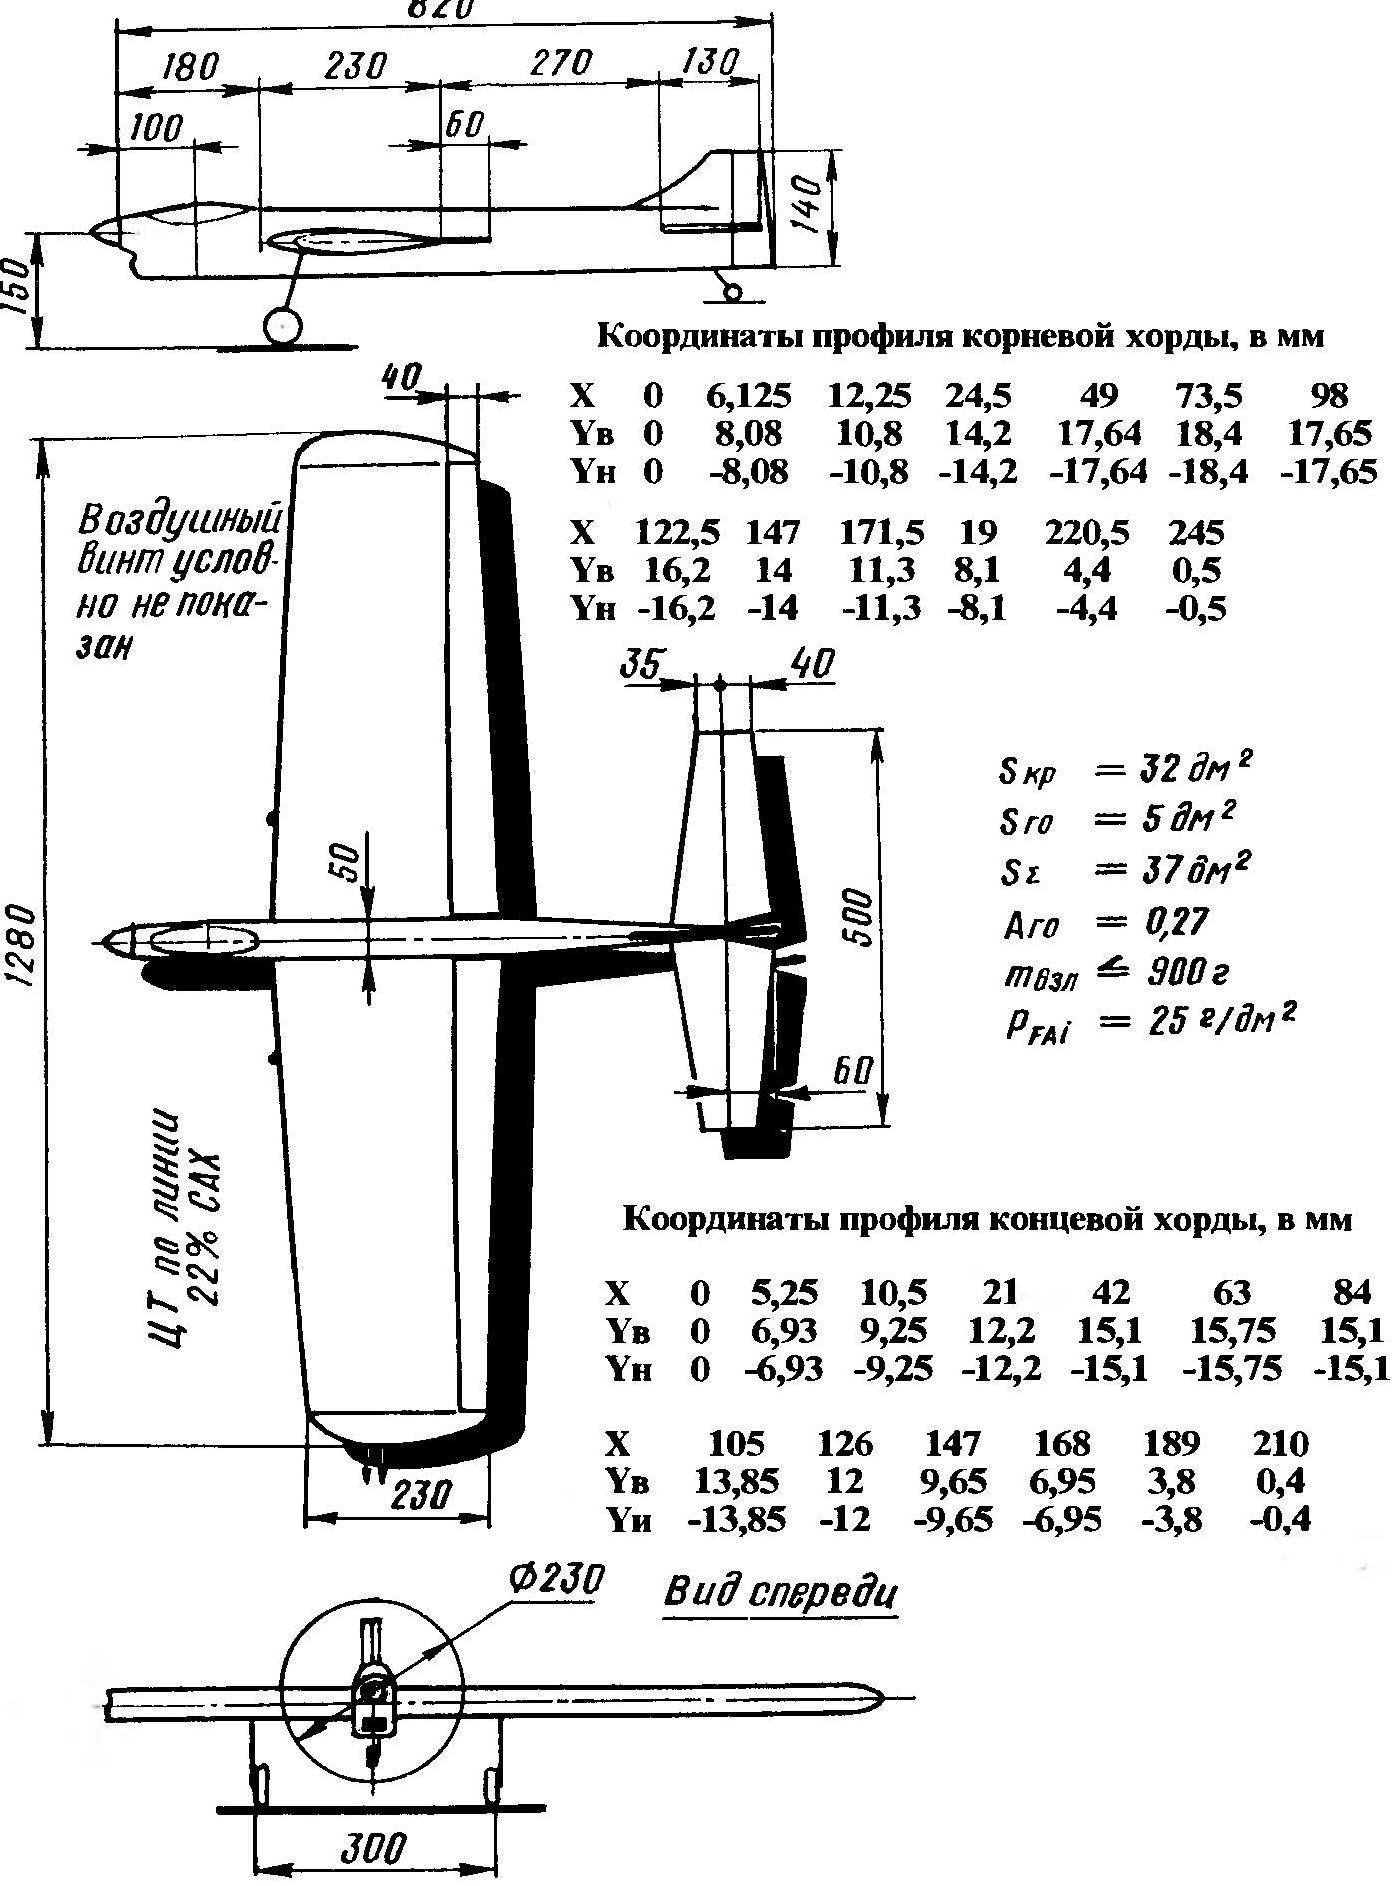 Basic dimensions of the pilot models